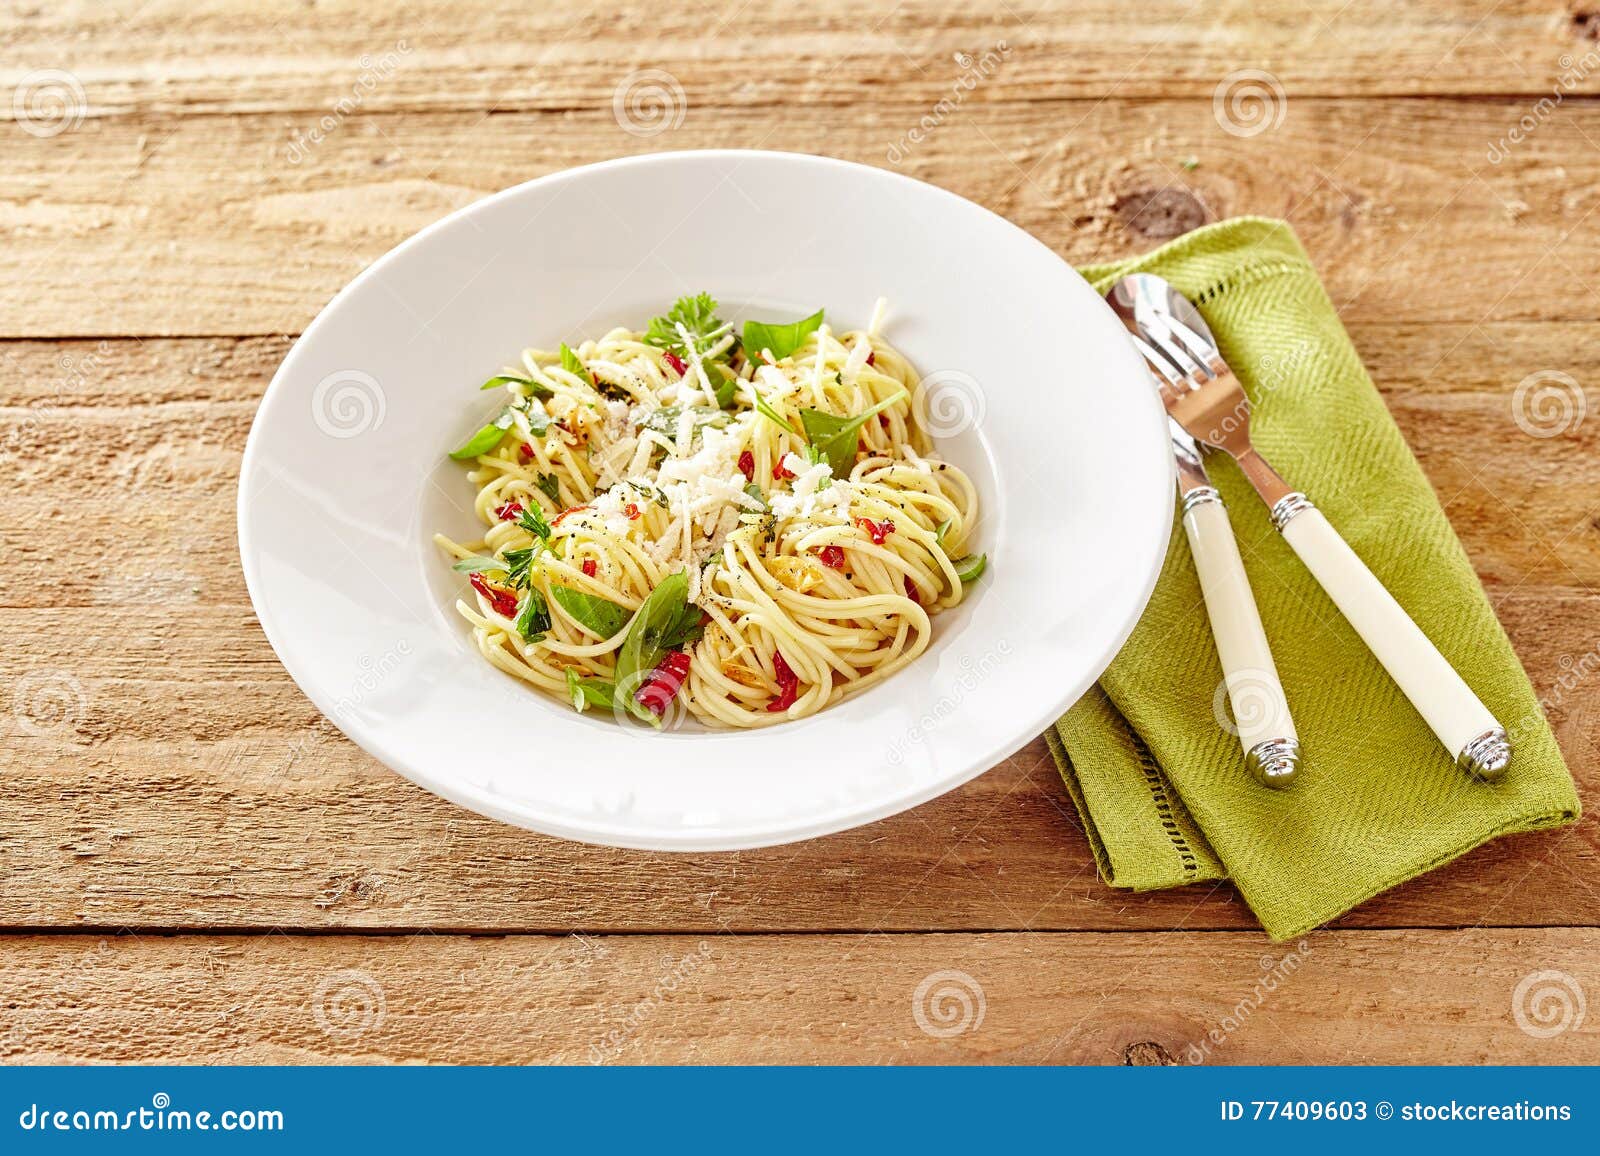 plate of italian spaghetti aglio olio with basil and tomato